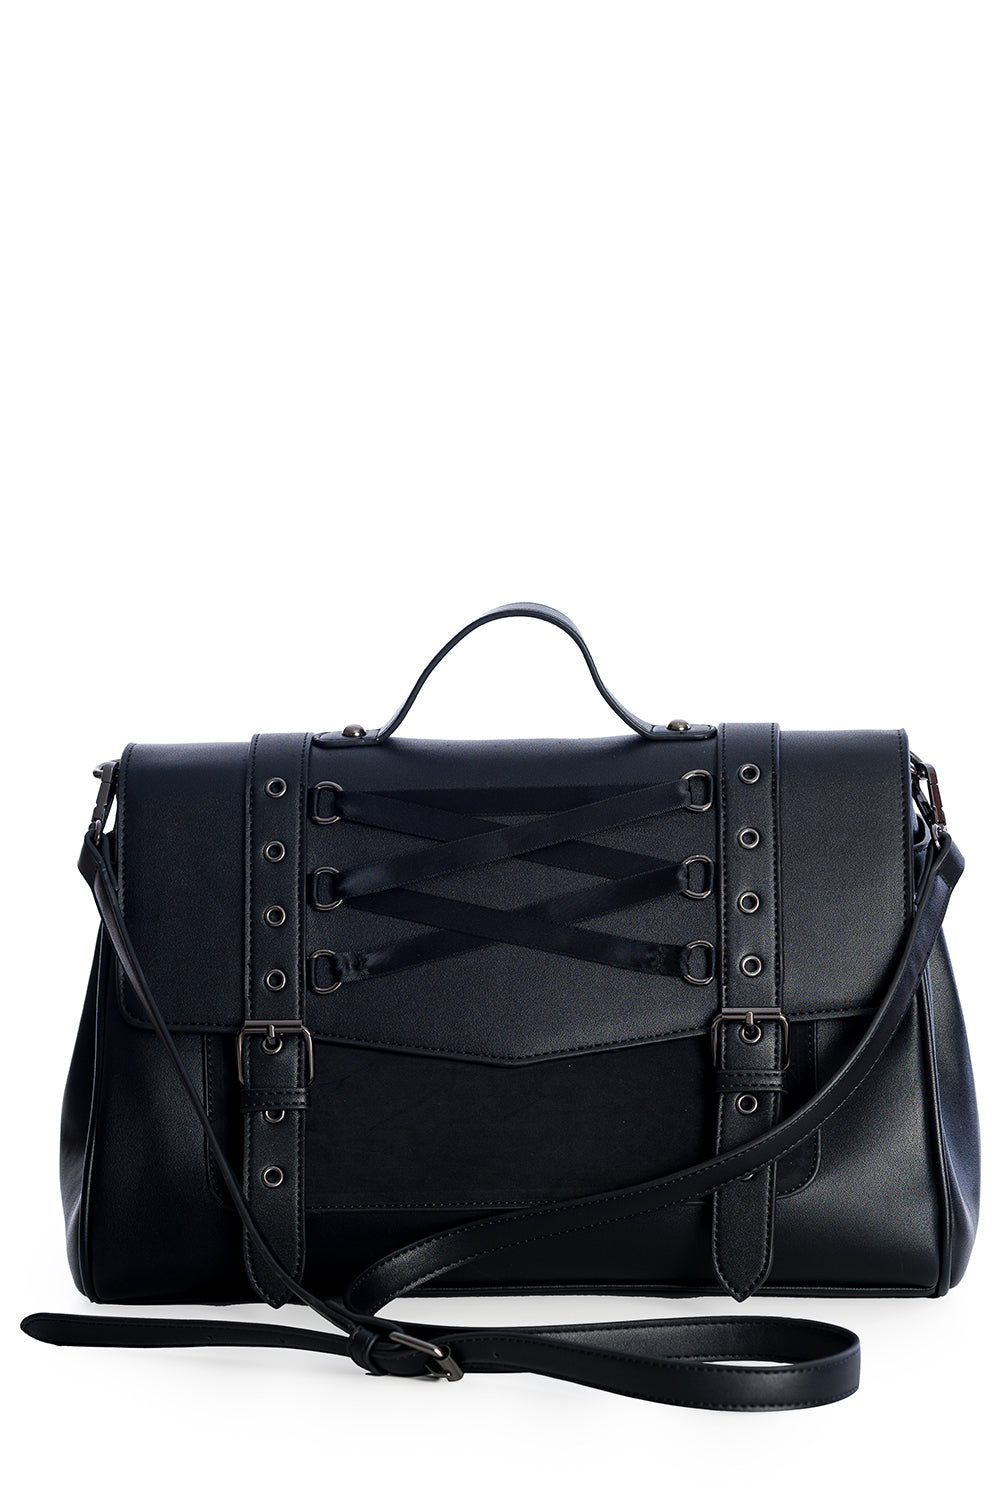 Black corset detailed handbag with buckles